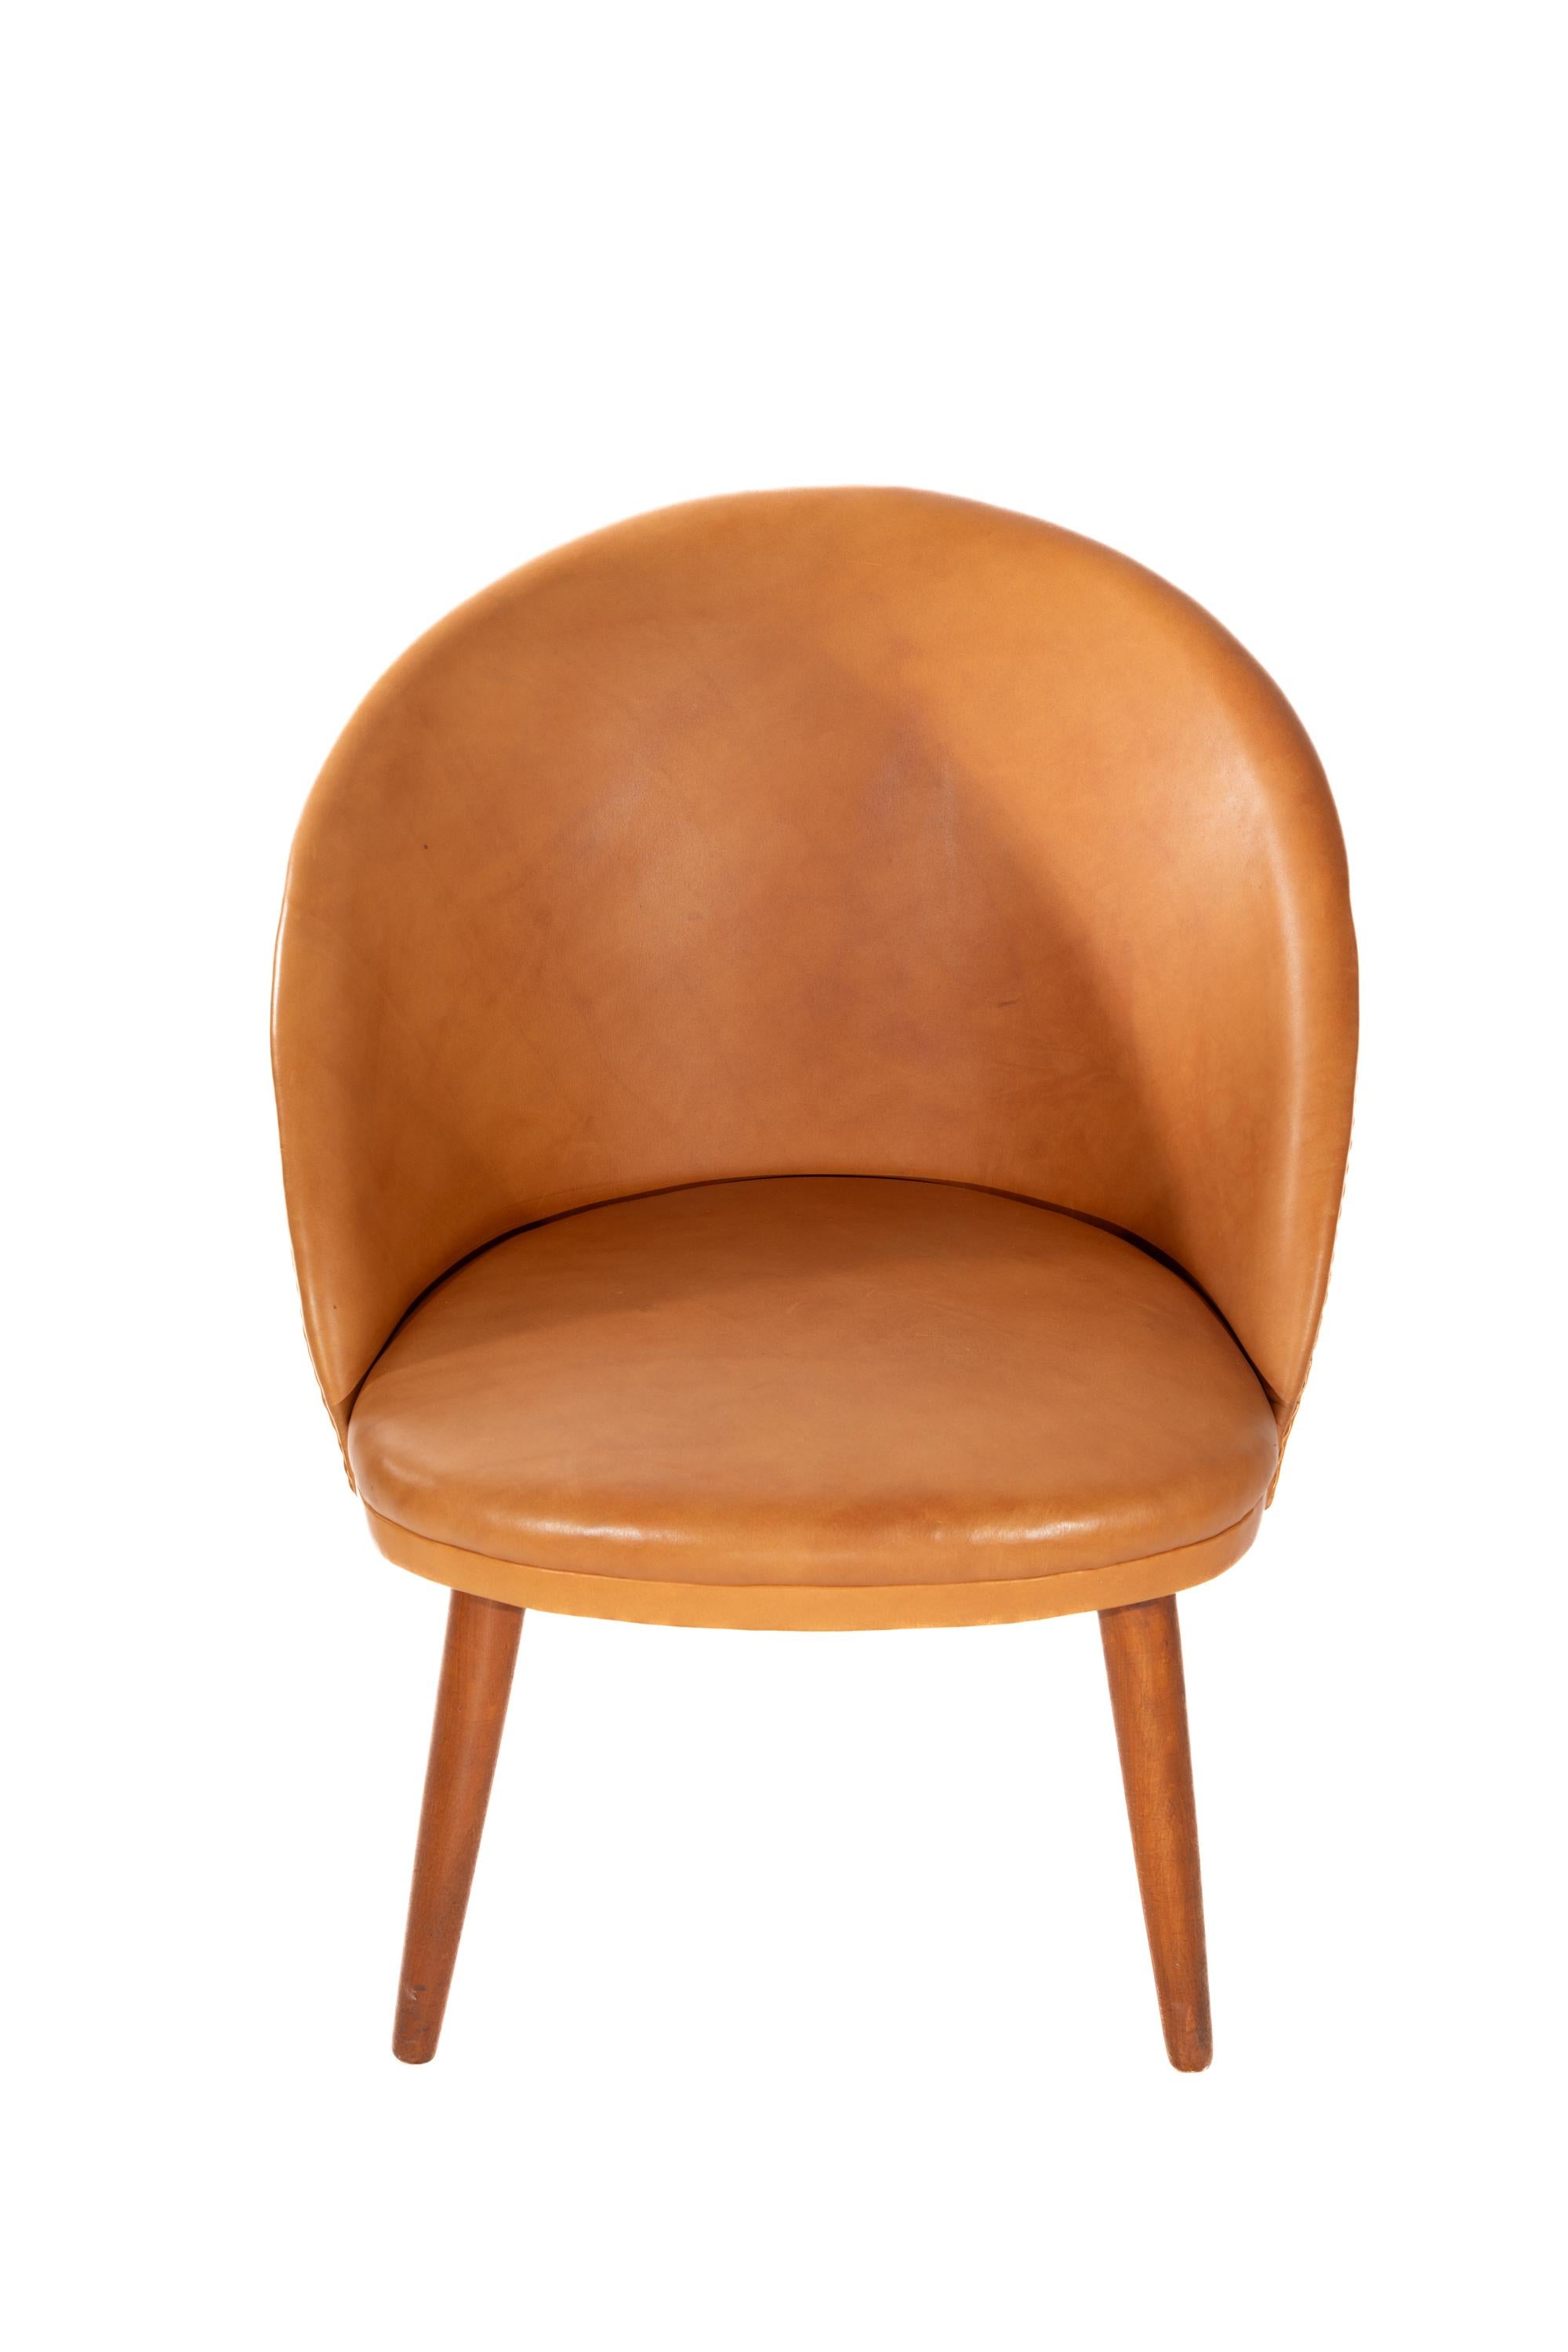 Danish Pair of Ejvind Johansson, Model 301 Lounge Chairs For Sale